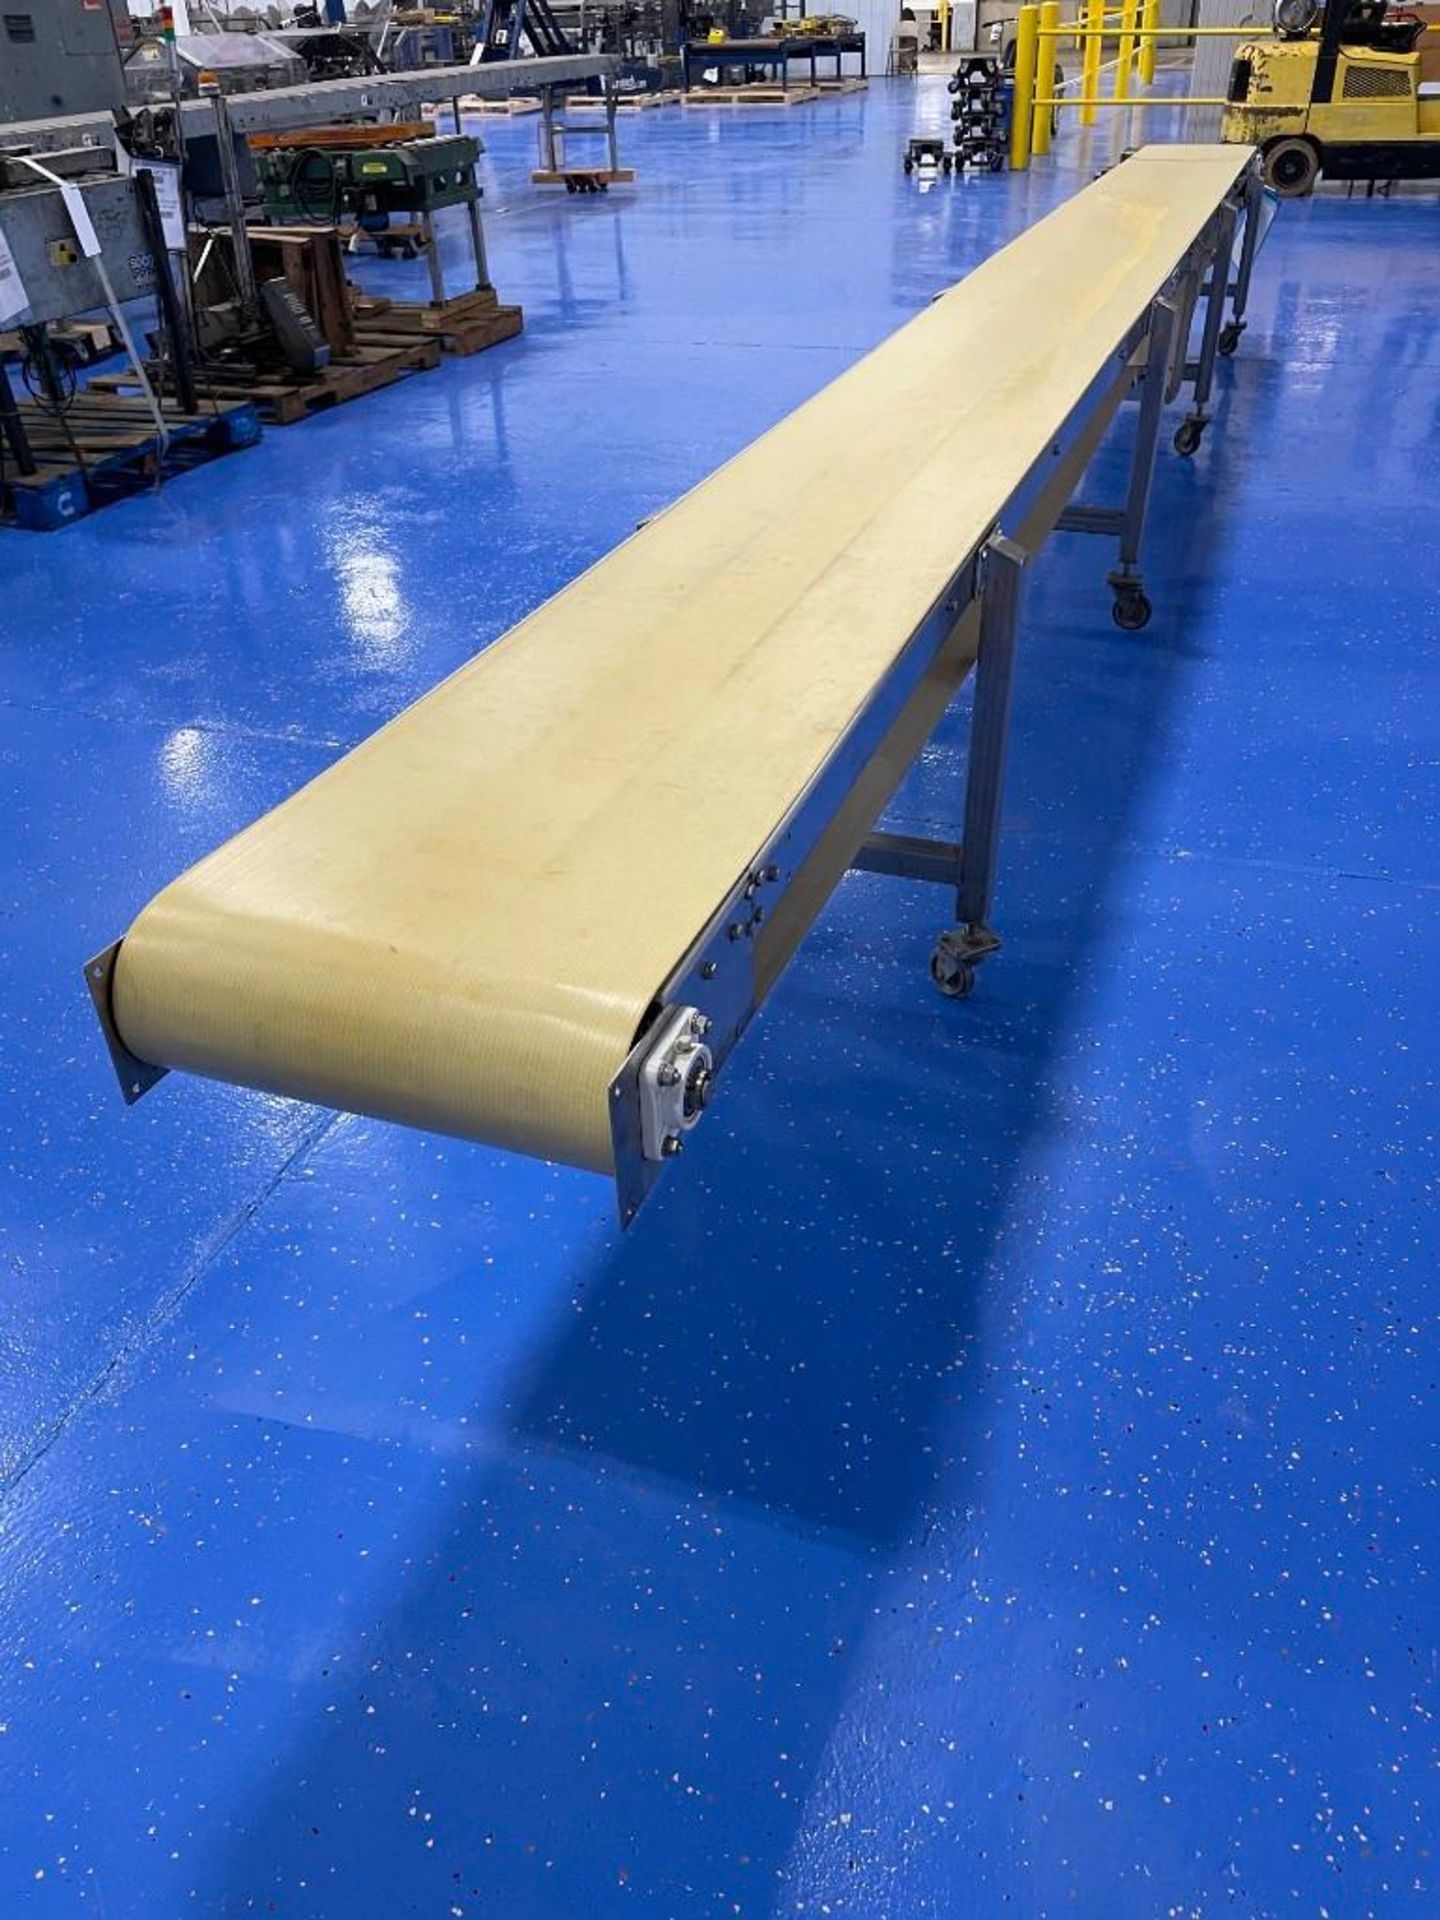 Smooth Top Belt Conveyor 22' L x 18" W - Image 2 of 7